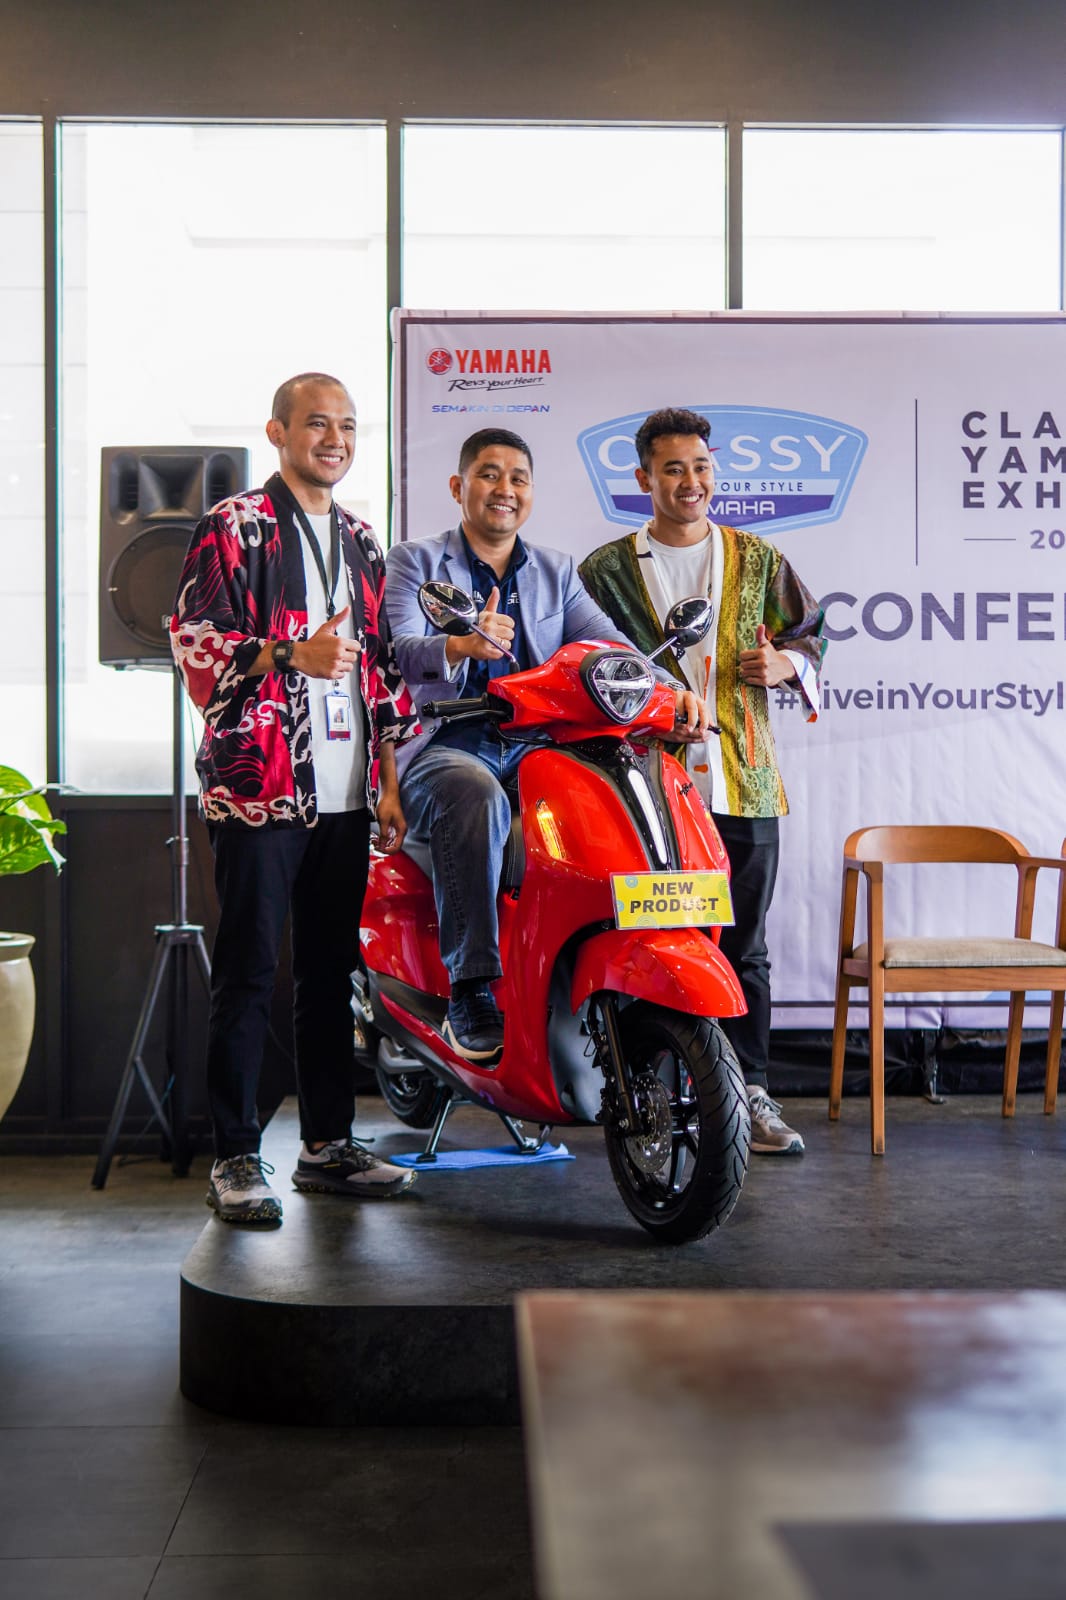 Kemeriahan Classy Yamaha Exhibition di Yogyakarta, Berhadiah Motor Grand Filano Hybrid-Connected